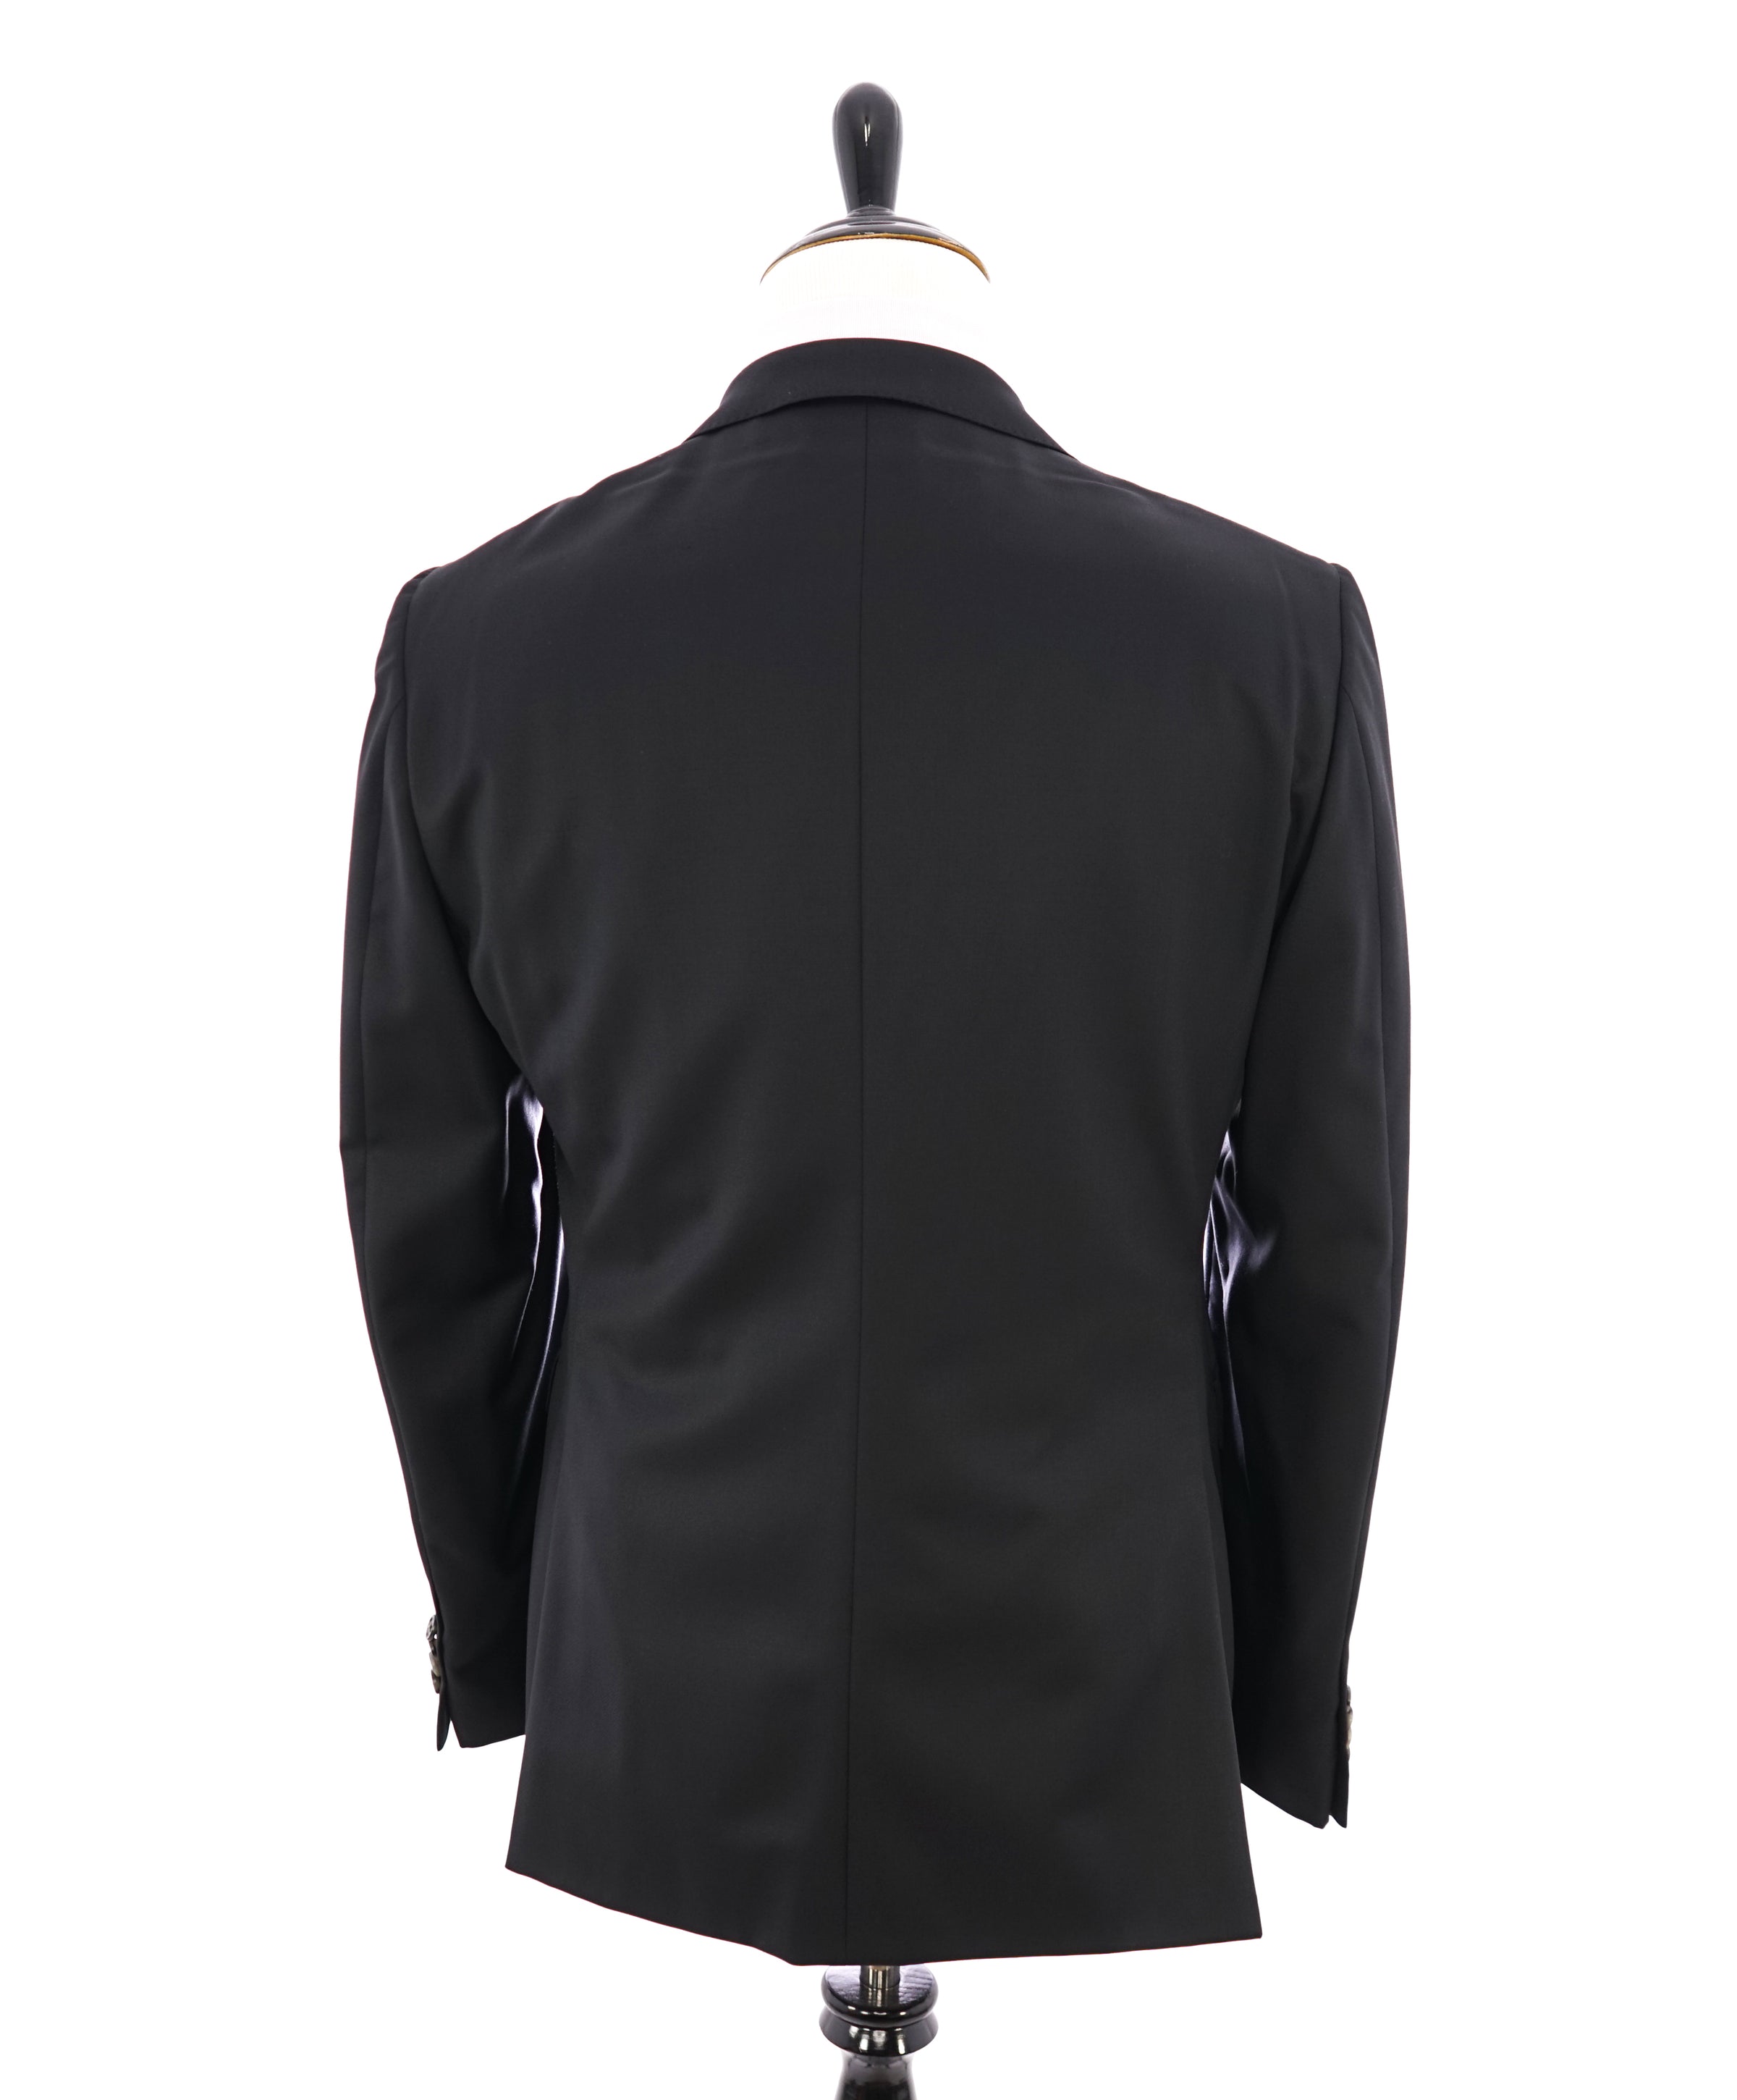 Z Zegna 16 No-Slip Plastic Suit Jacket Coat Hangers 3-Pack Black